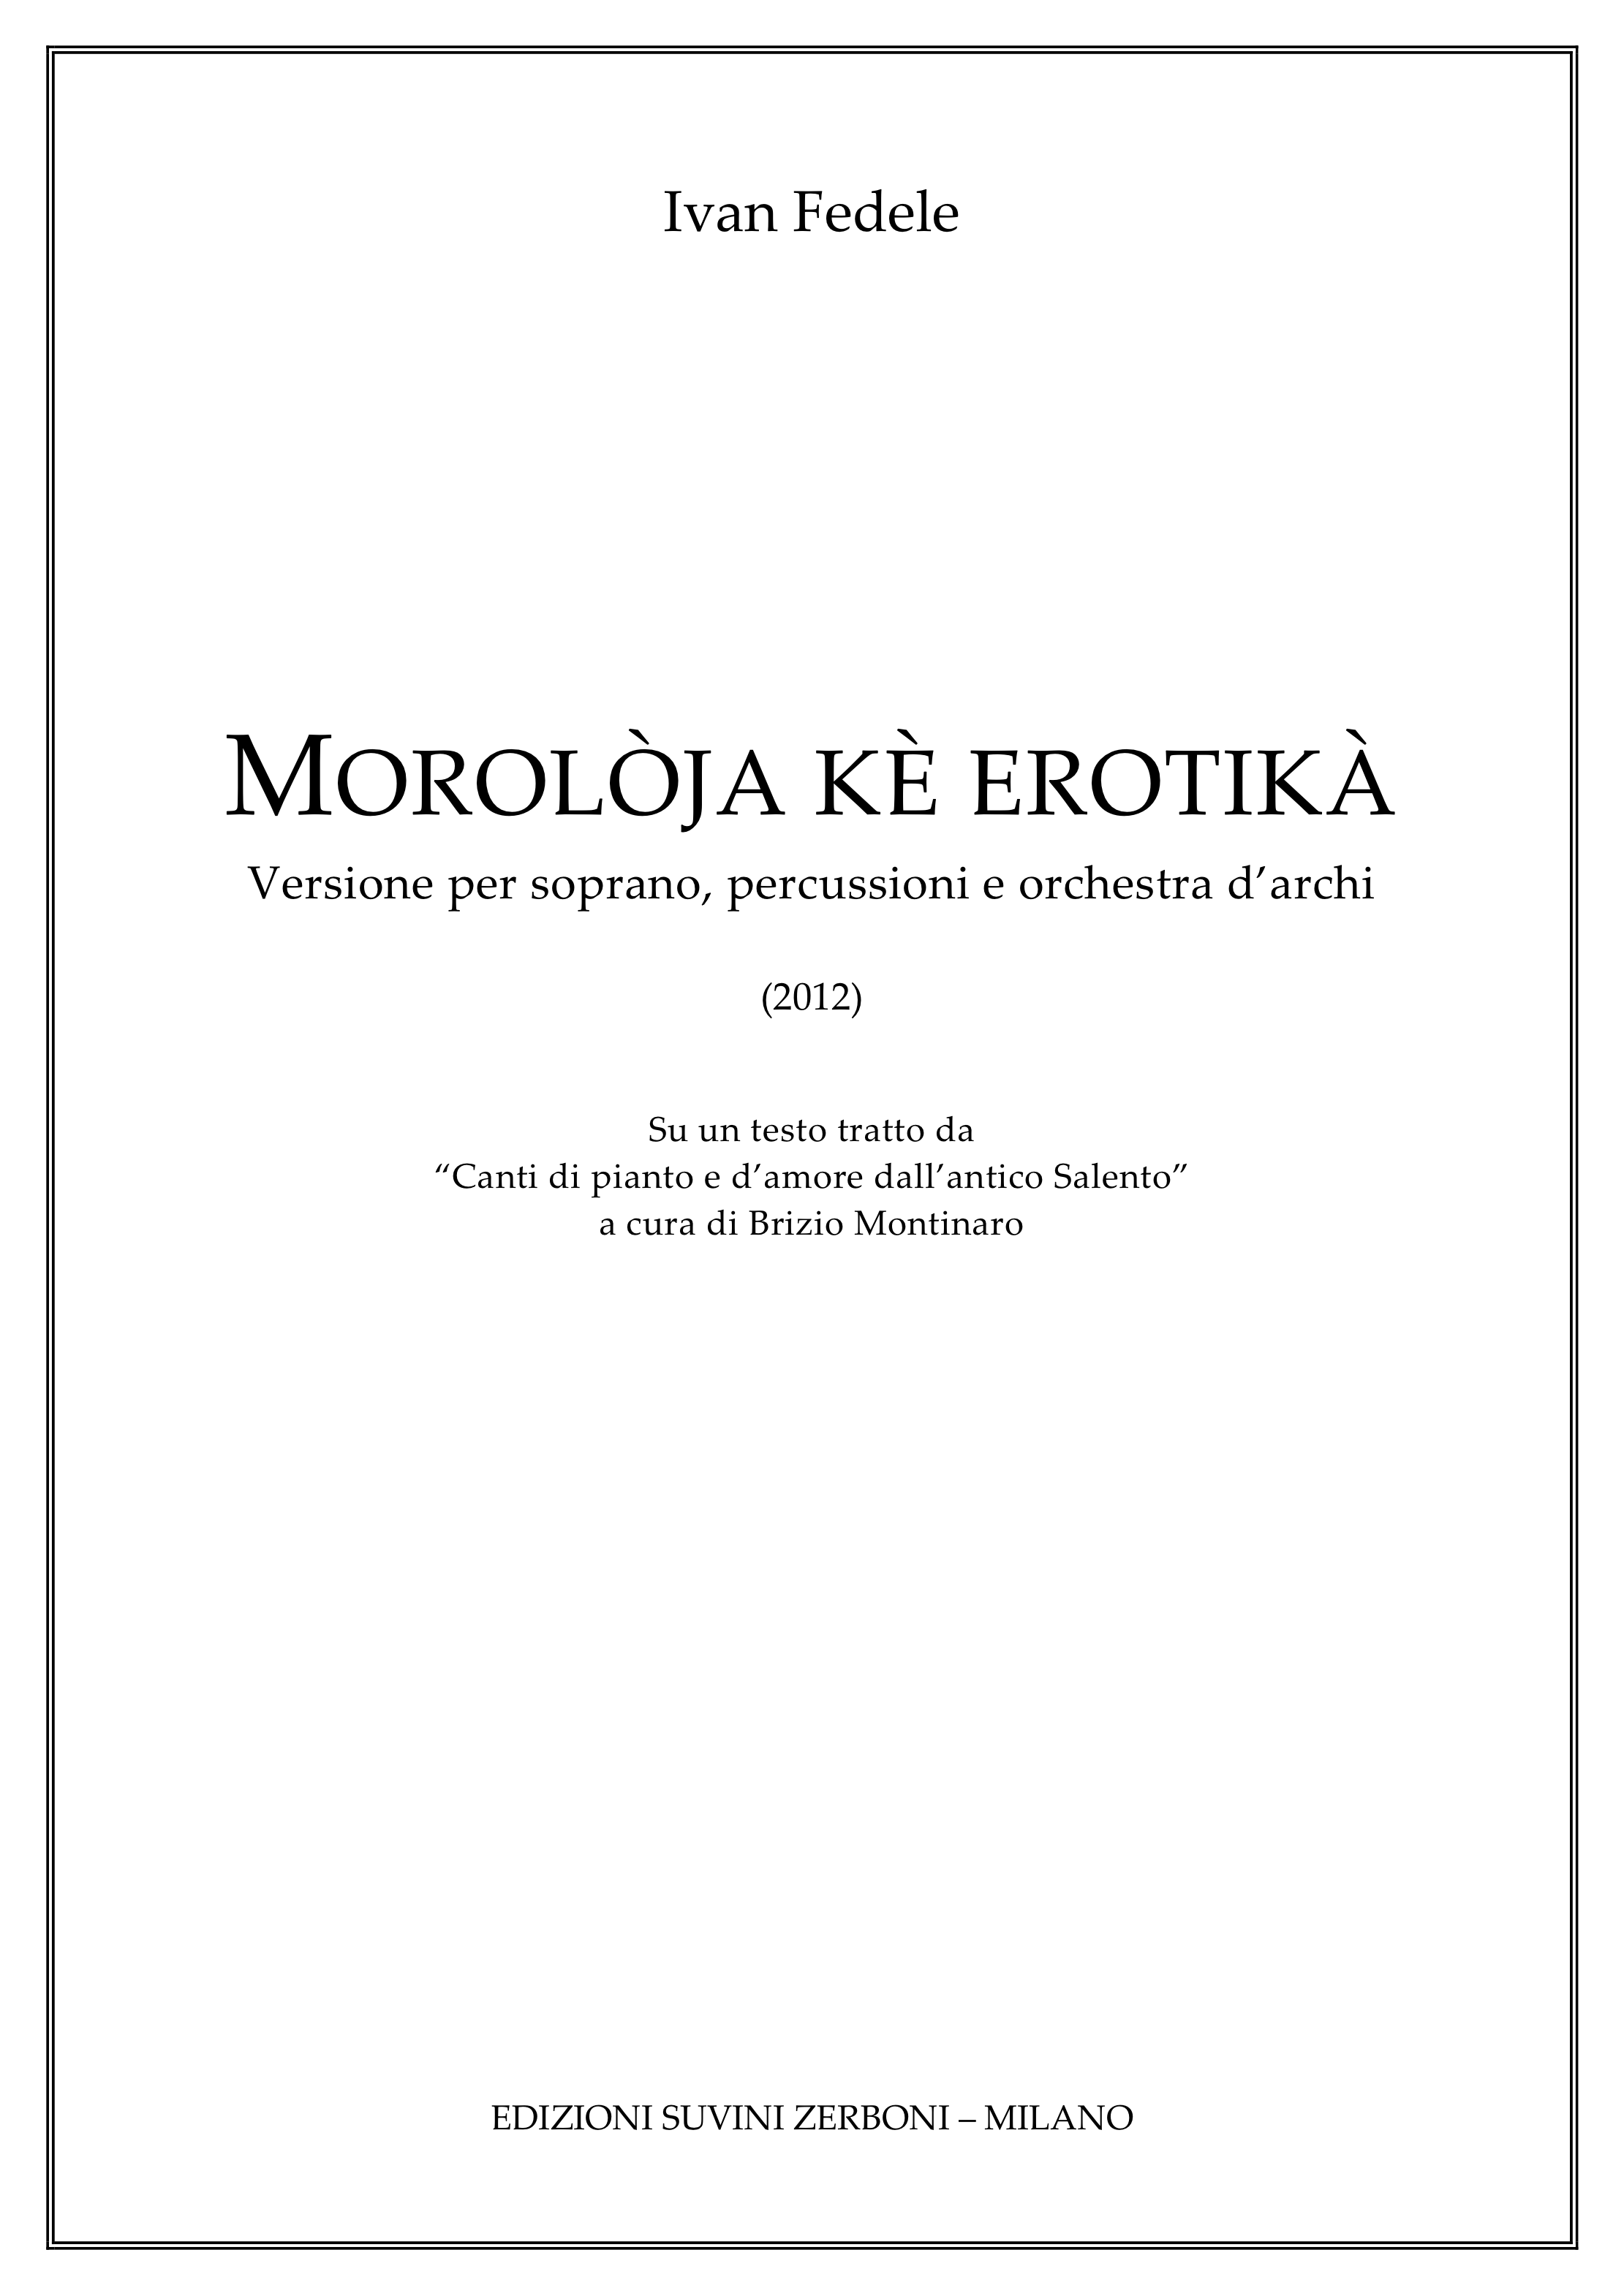 Moroloja ke erotika_ versione per orchestra d archi _Fedele 1